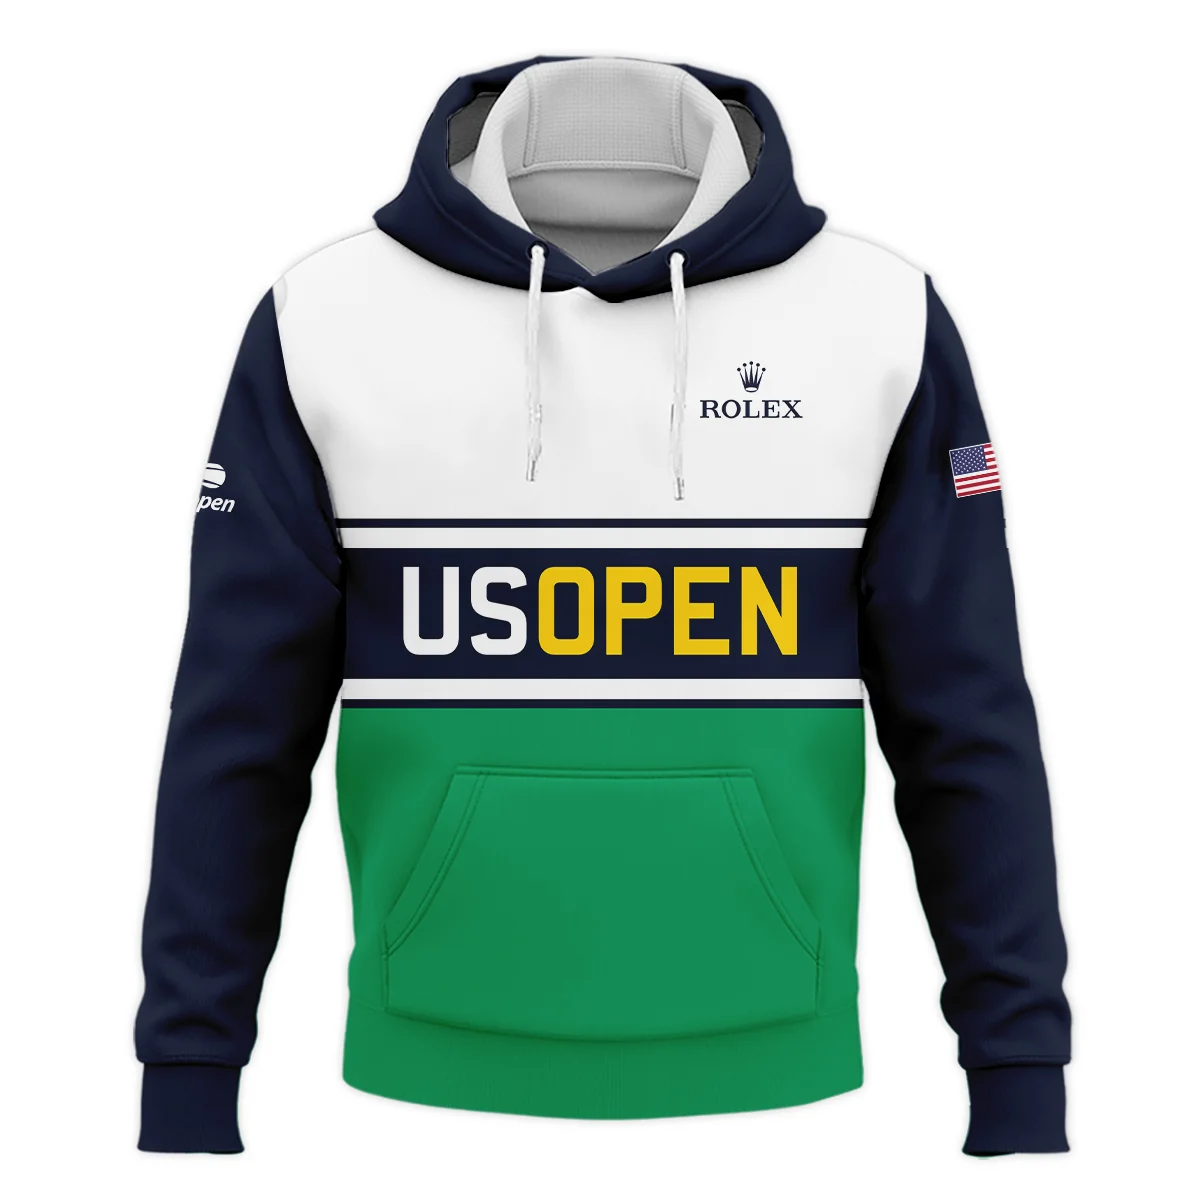 Tennis Love Sport Mix Color US Open Tennis Champions Rolex Vneck Polo Shirt Style Classic Polo Shirt For Men